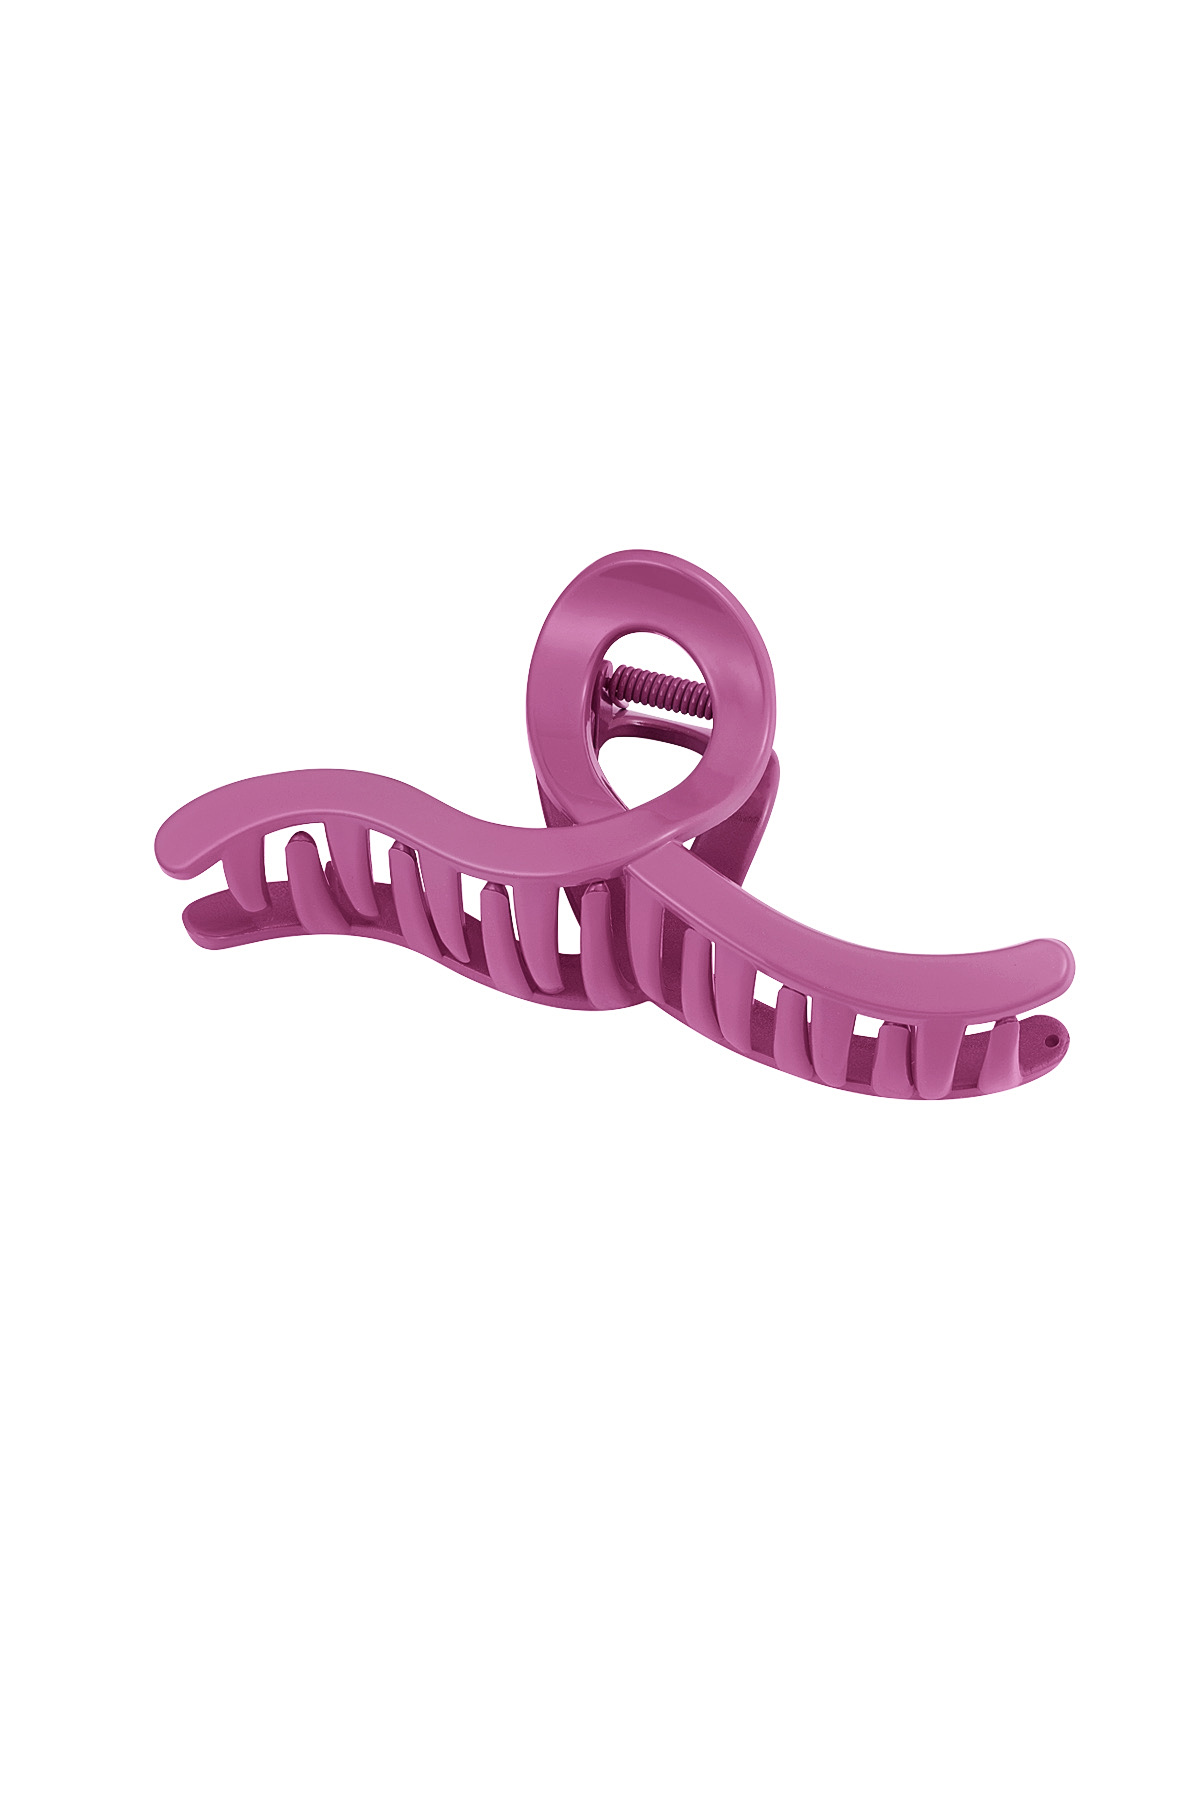 Hair clip swing - pink h5 